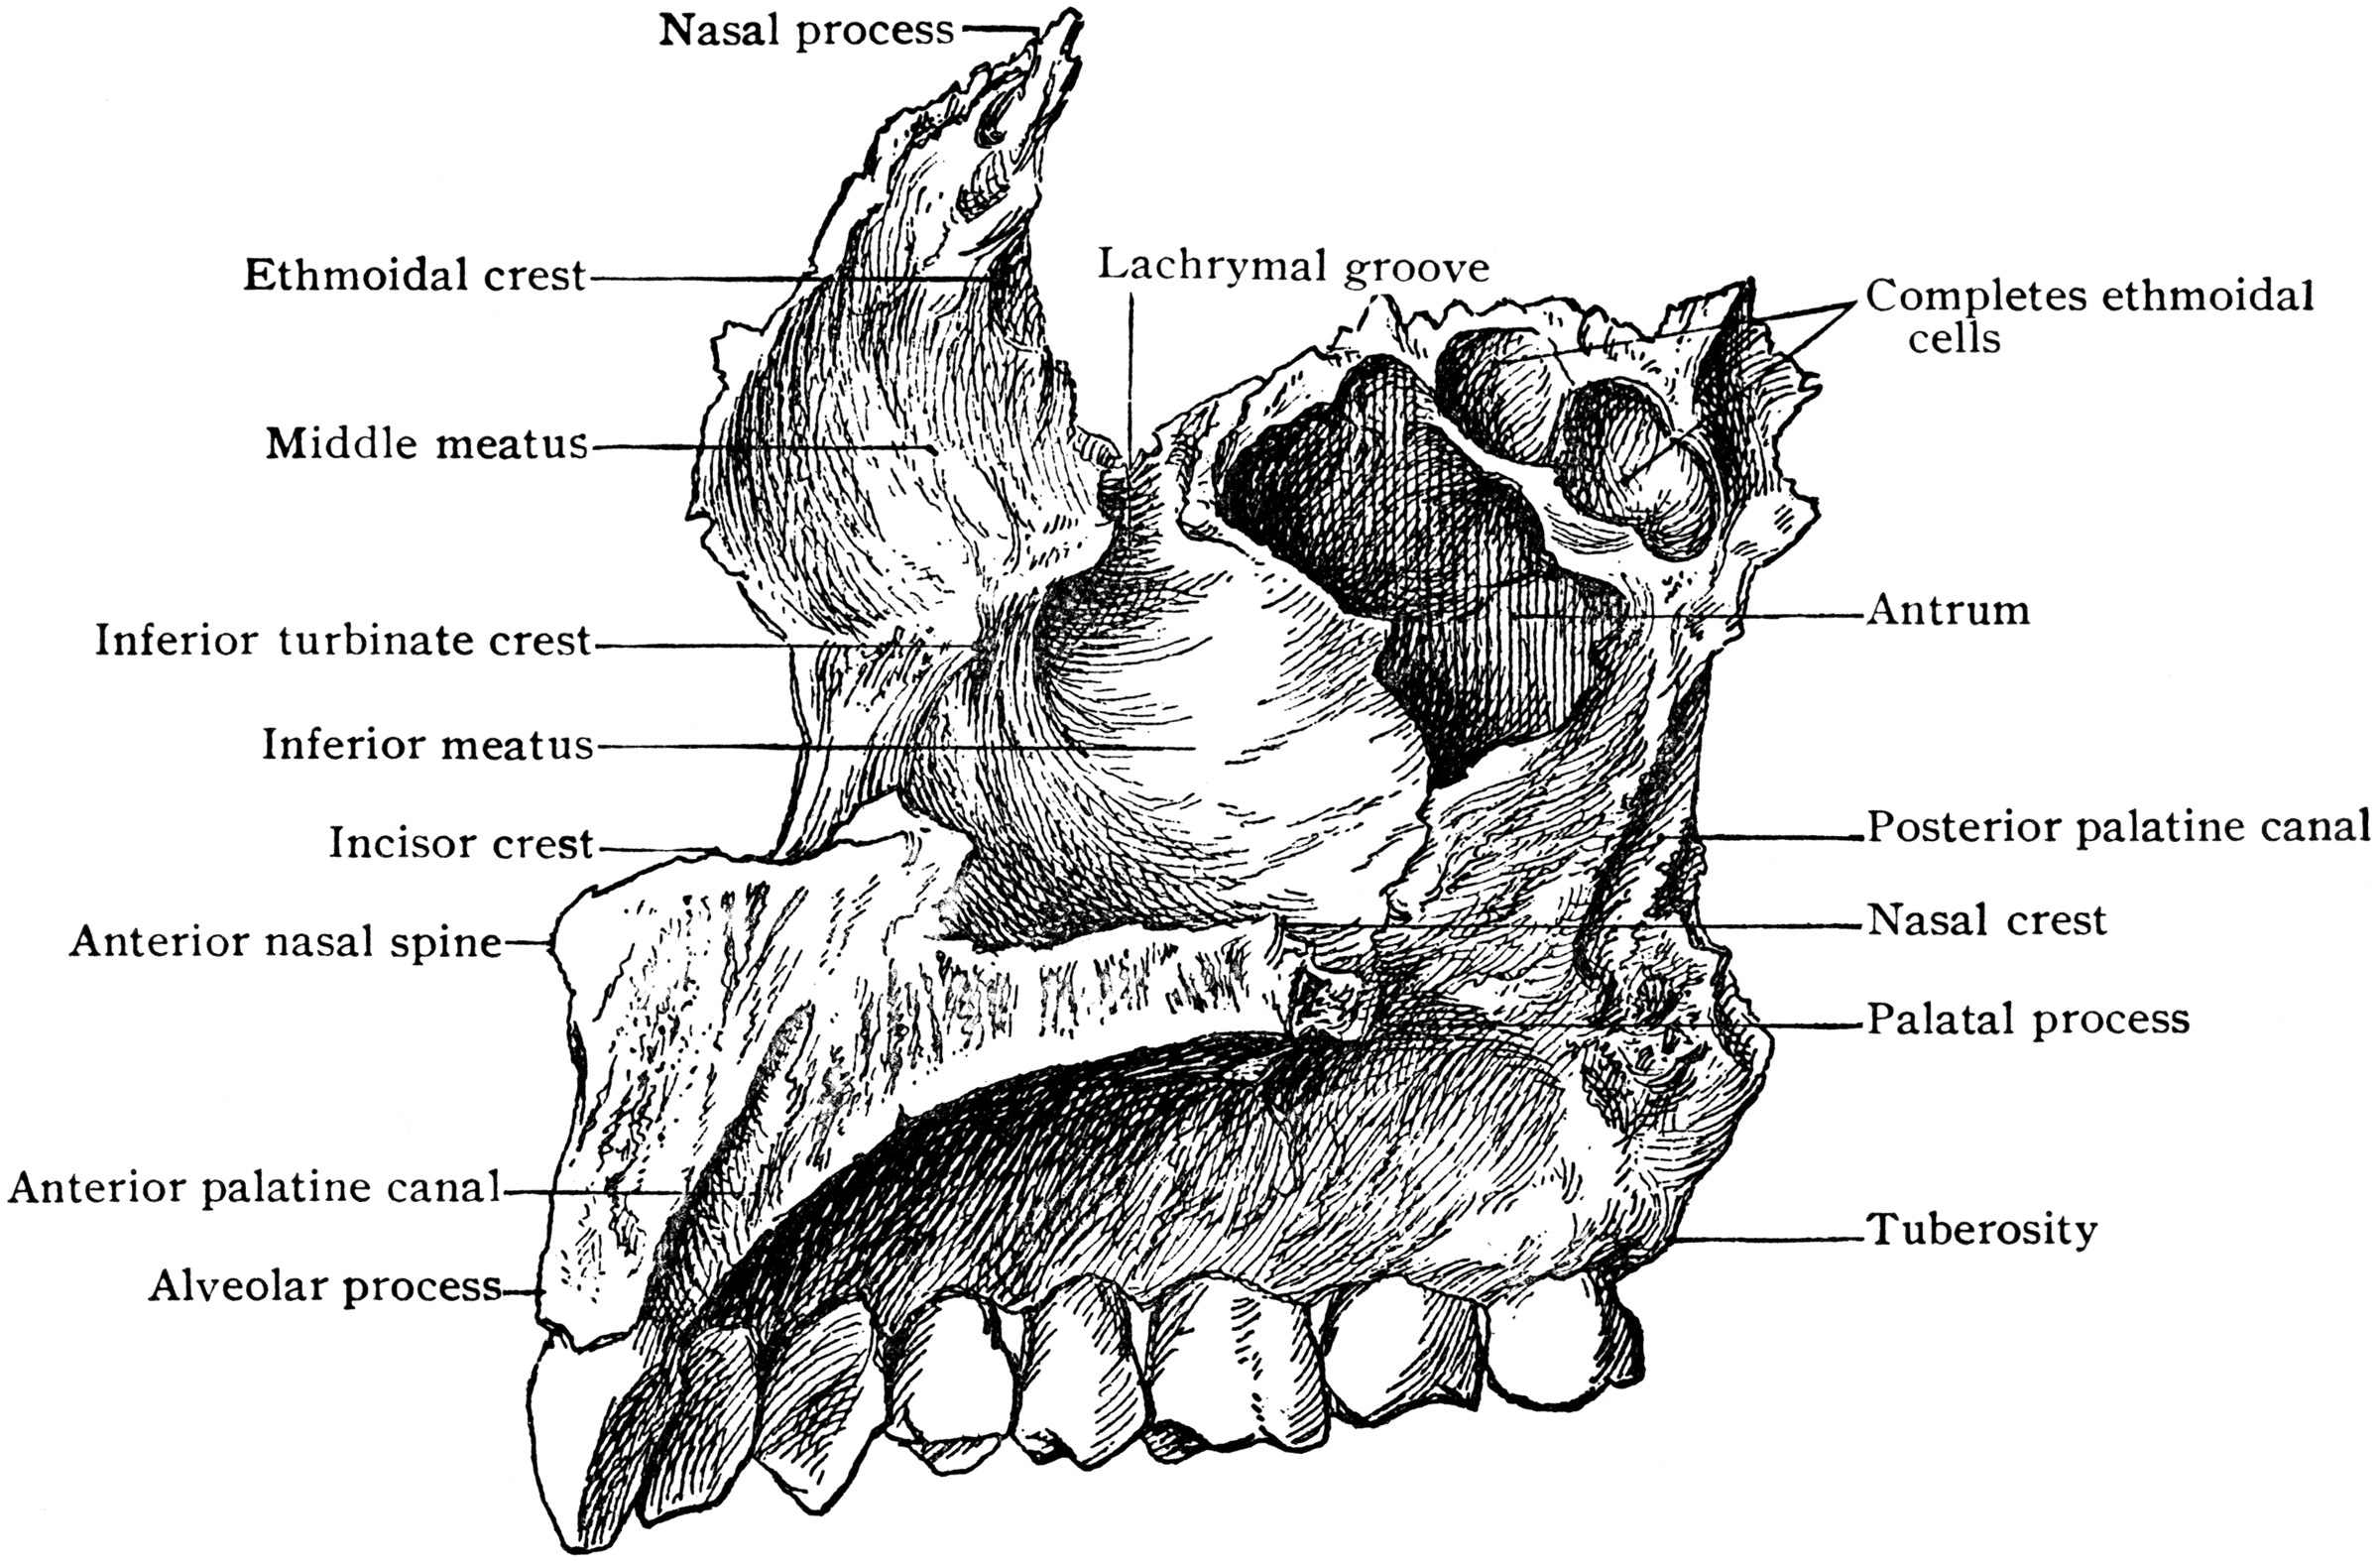 Superior Maxillary Bone | ClipArt ETC